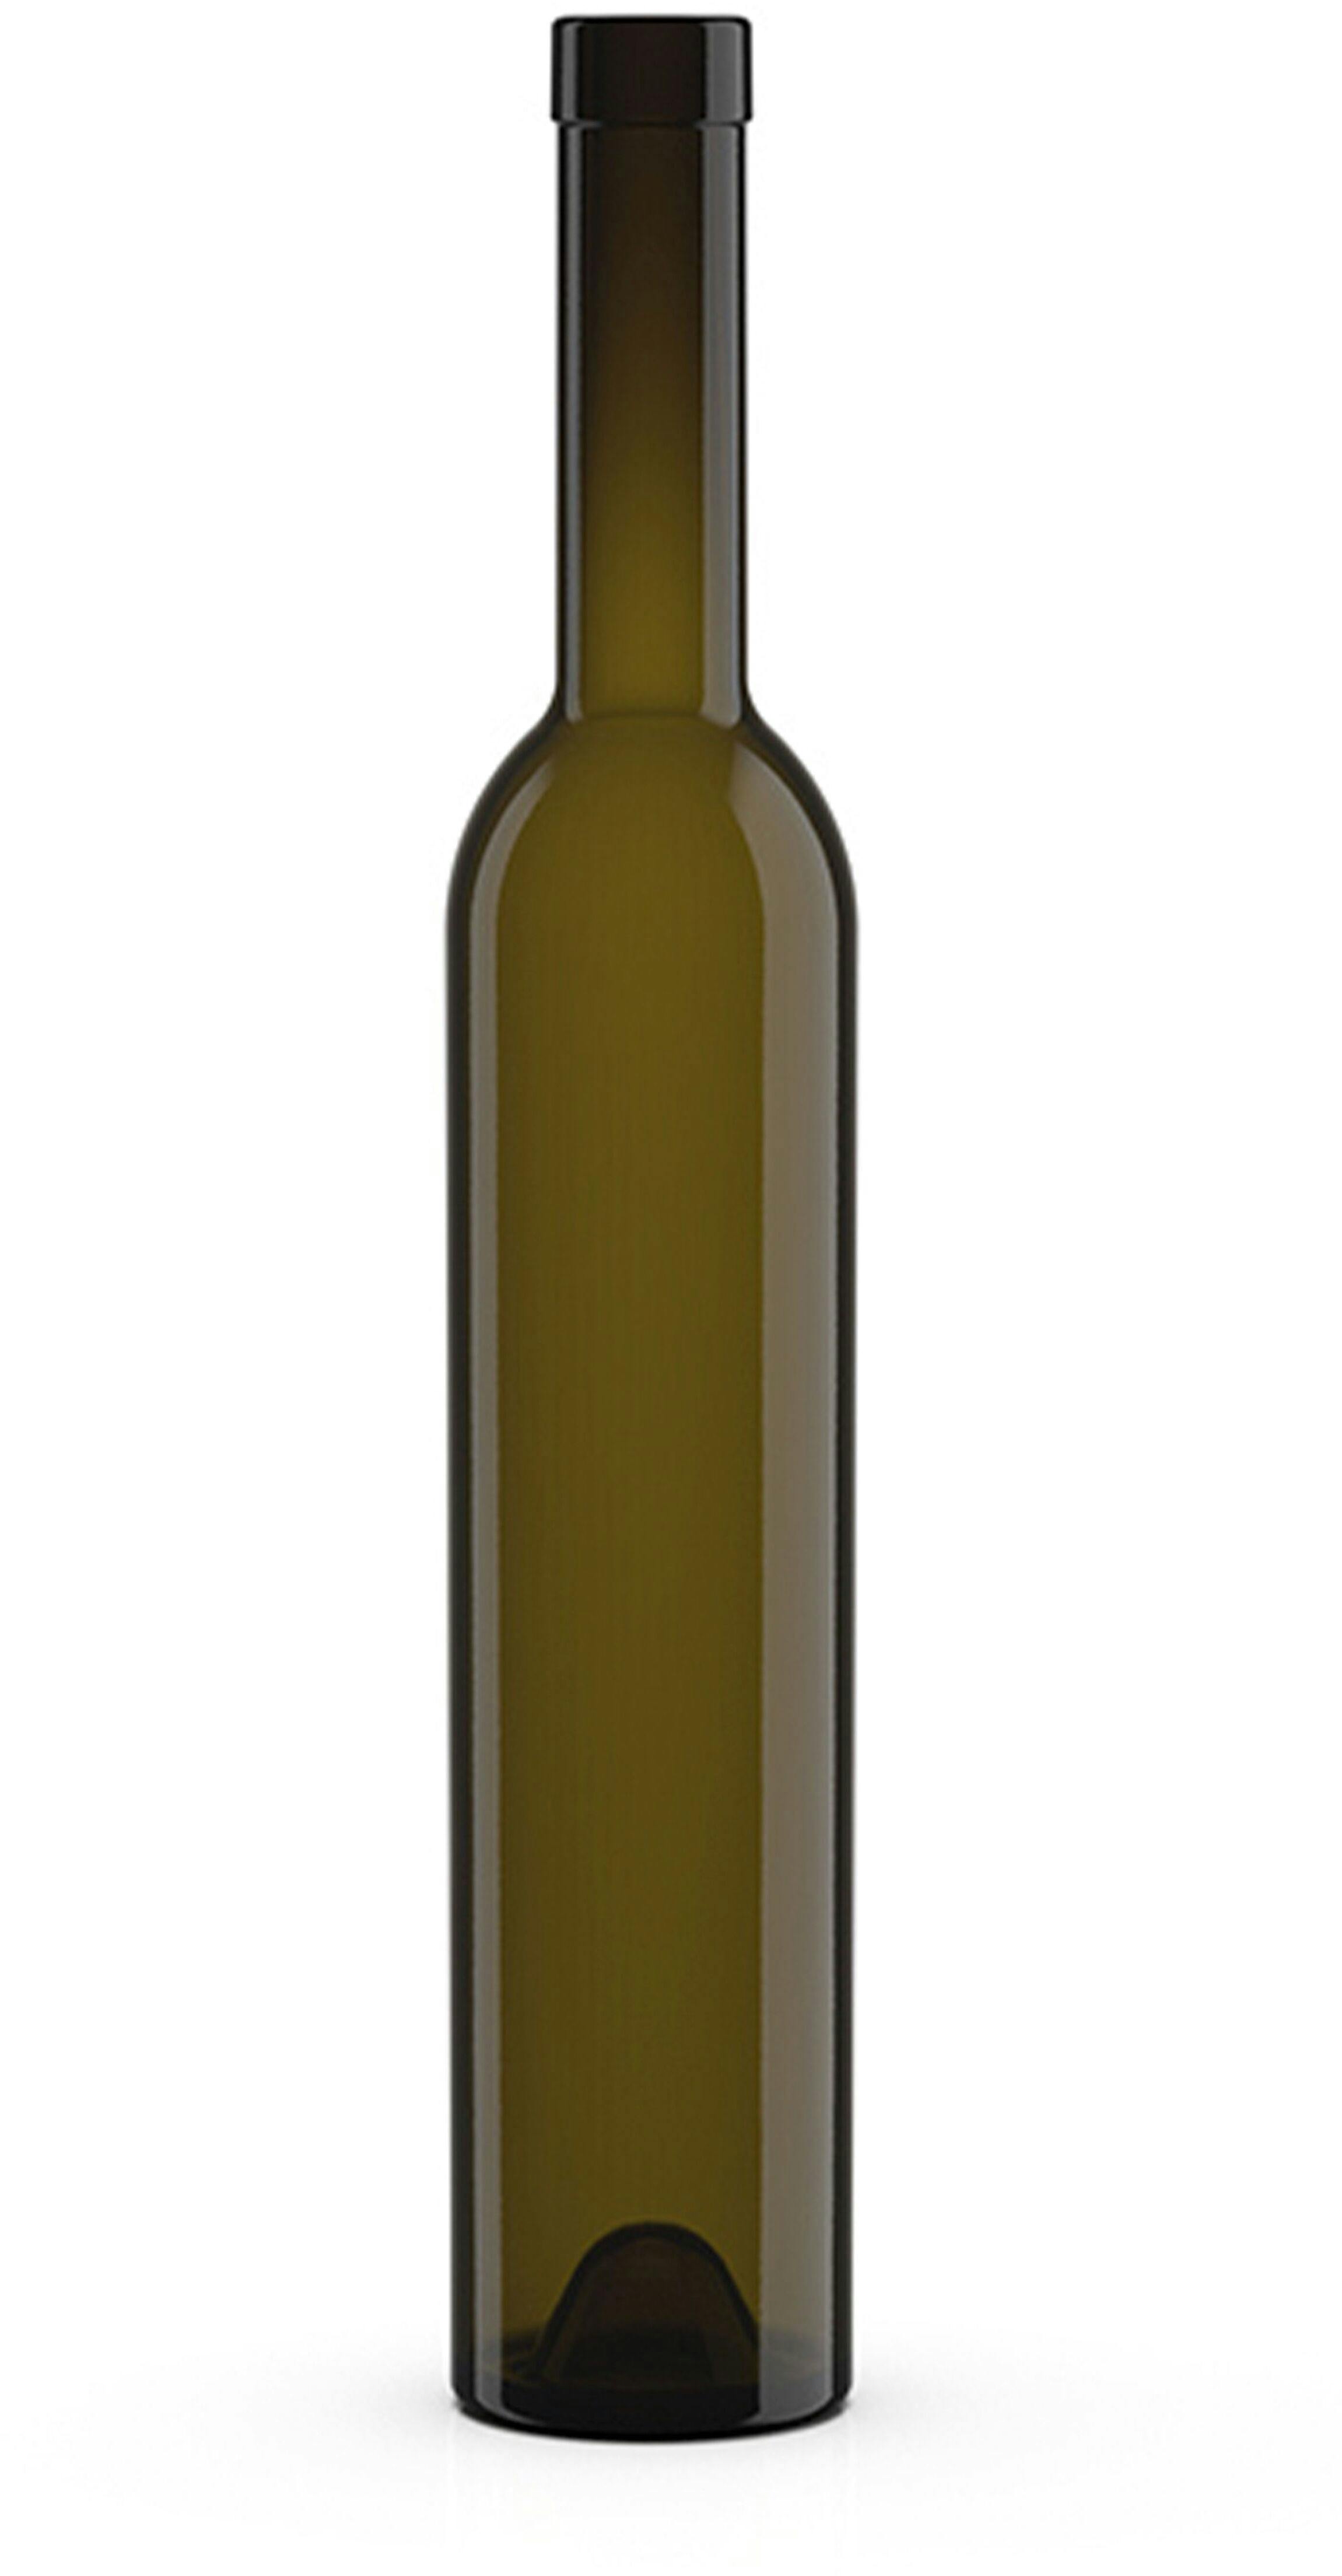 Flasche Bordeaux   S 25 ALLEGE 500 ml BG-Korken